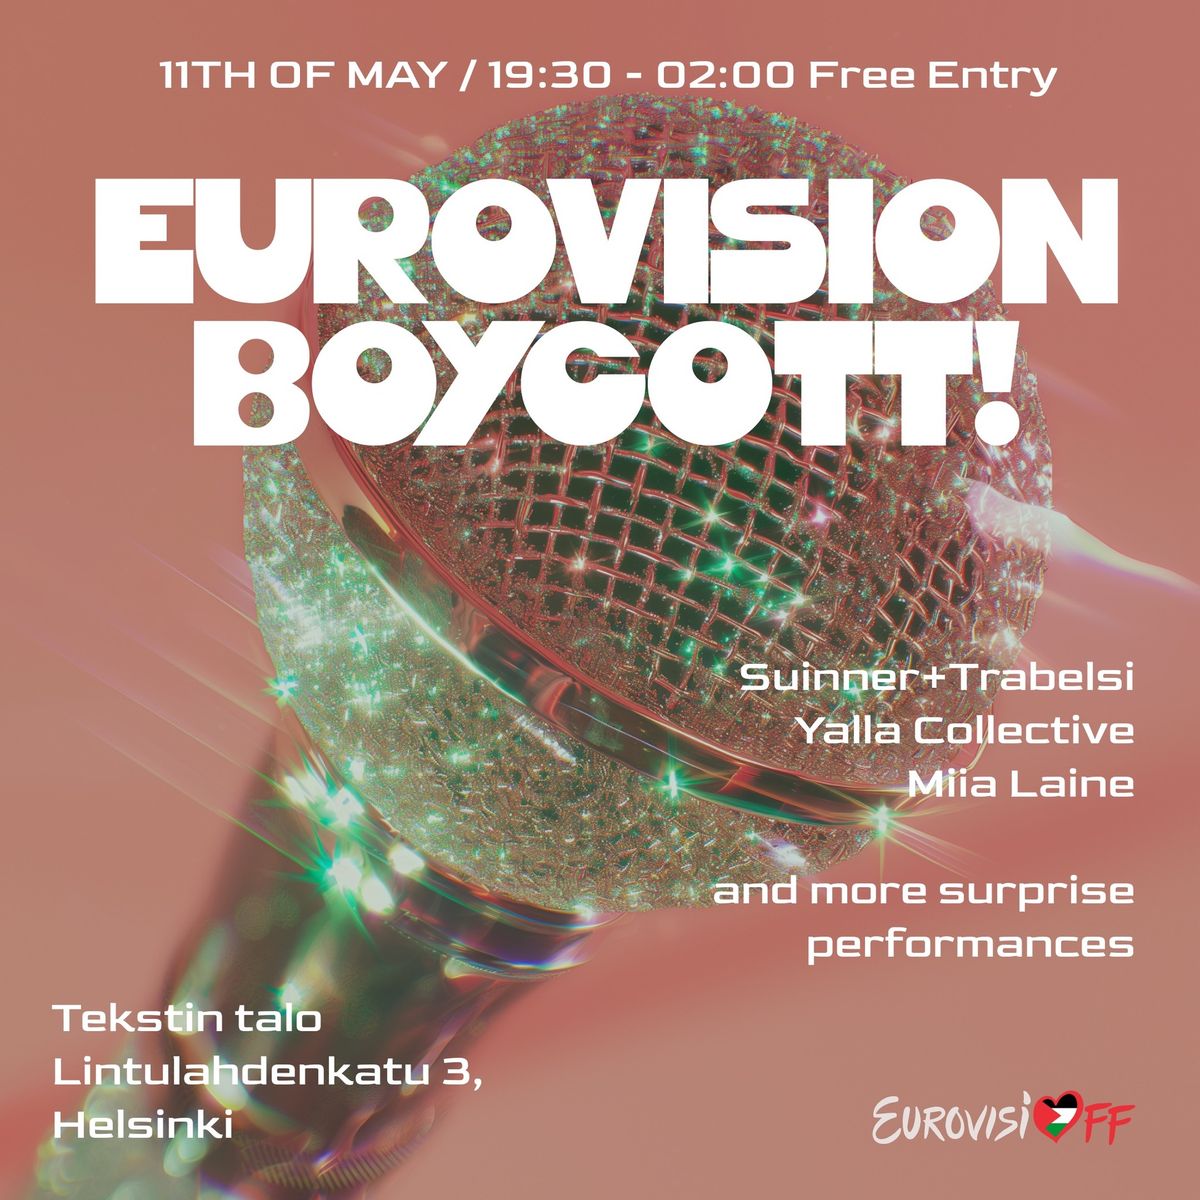 Eurovision boycott